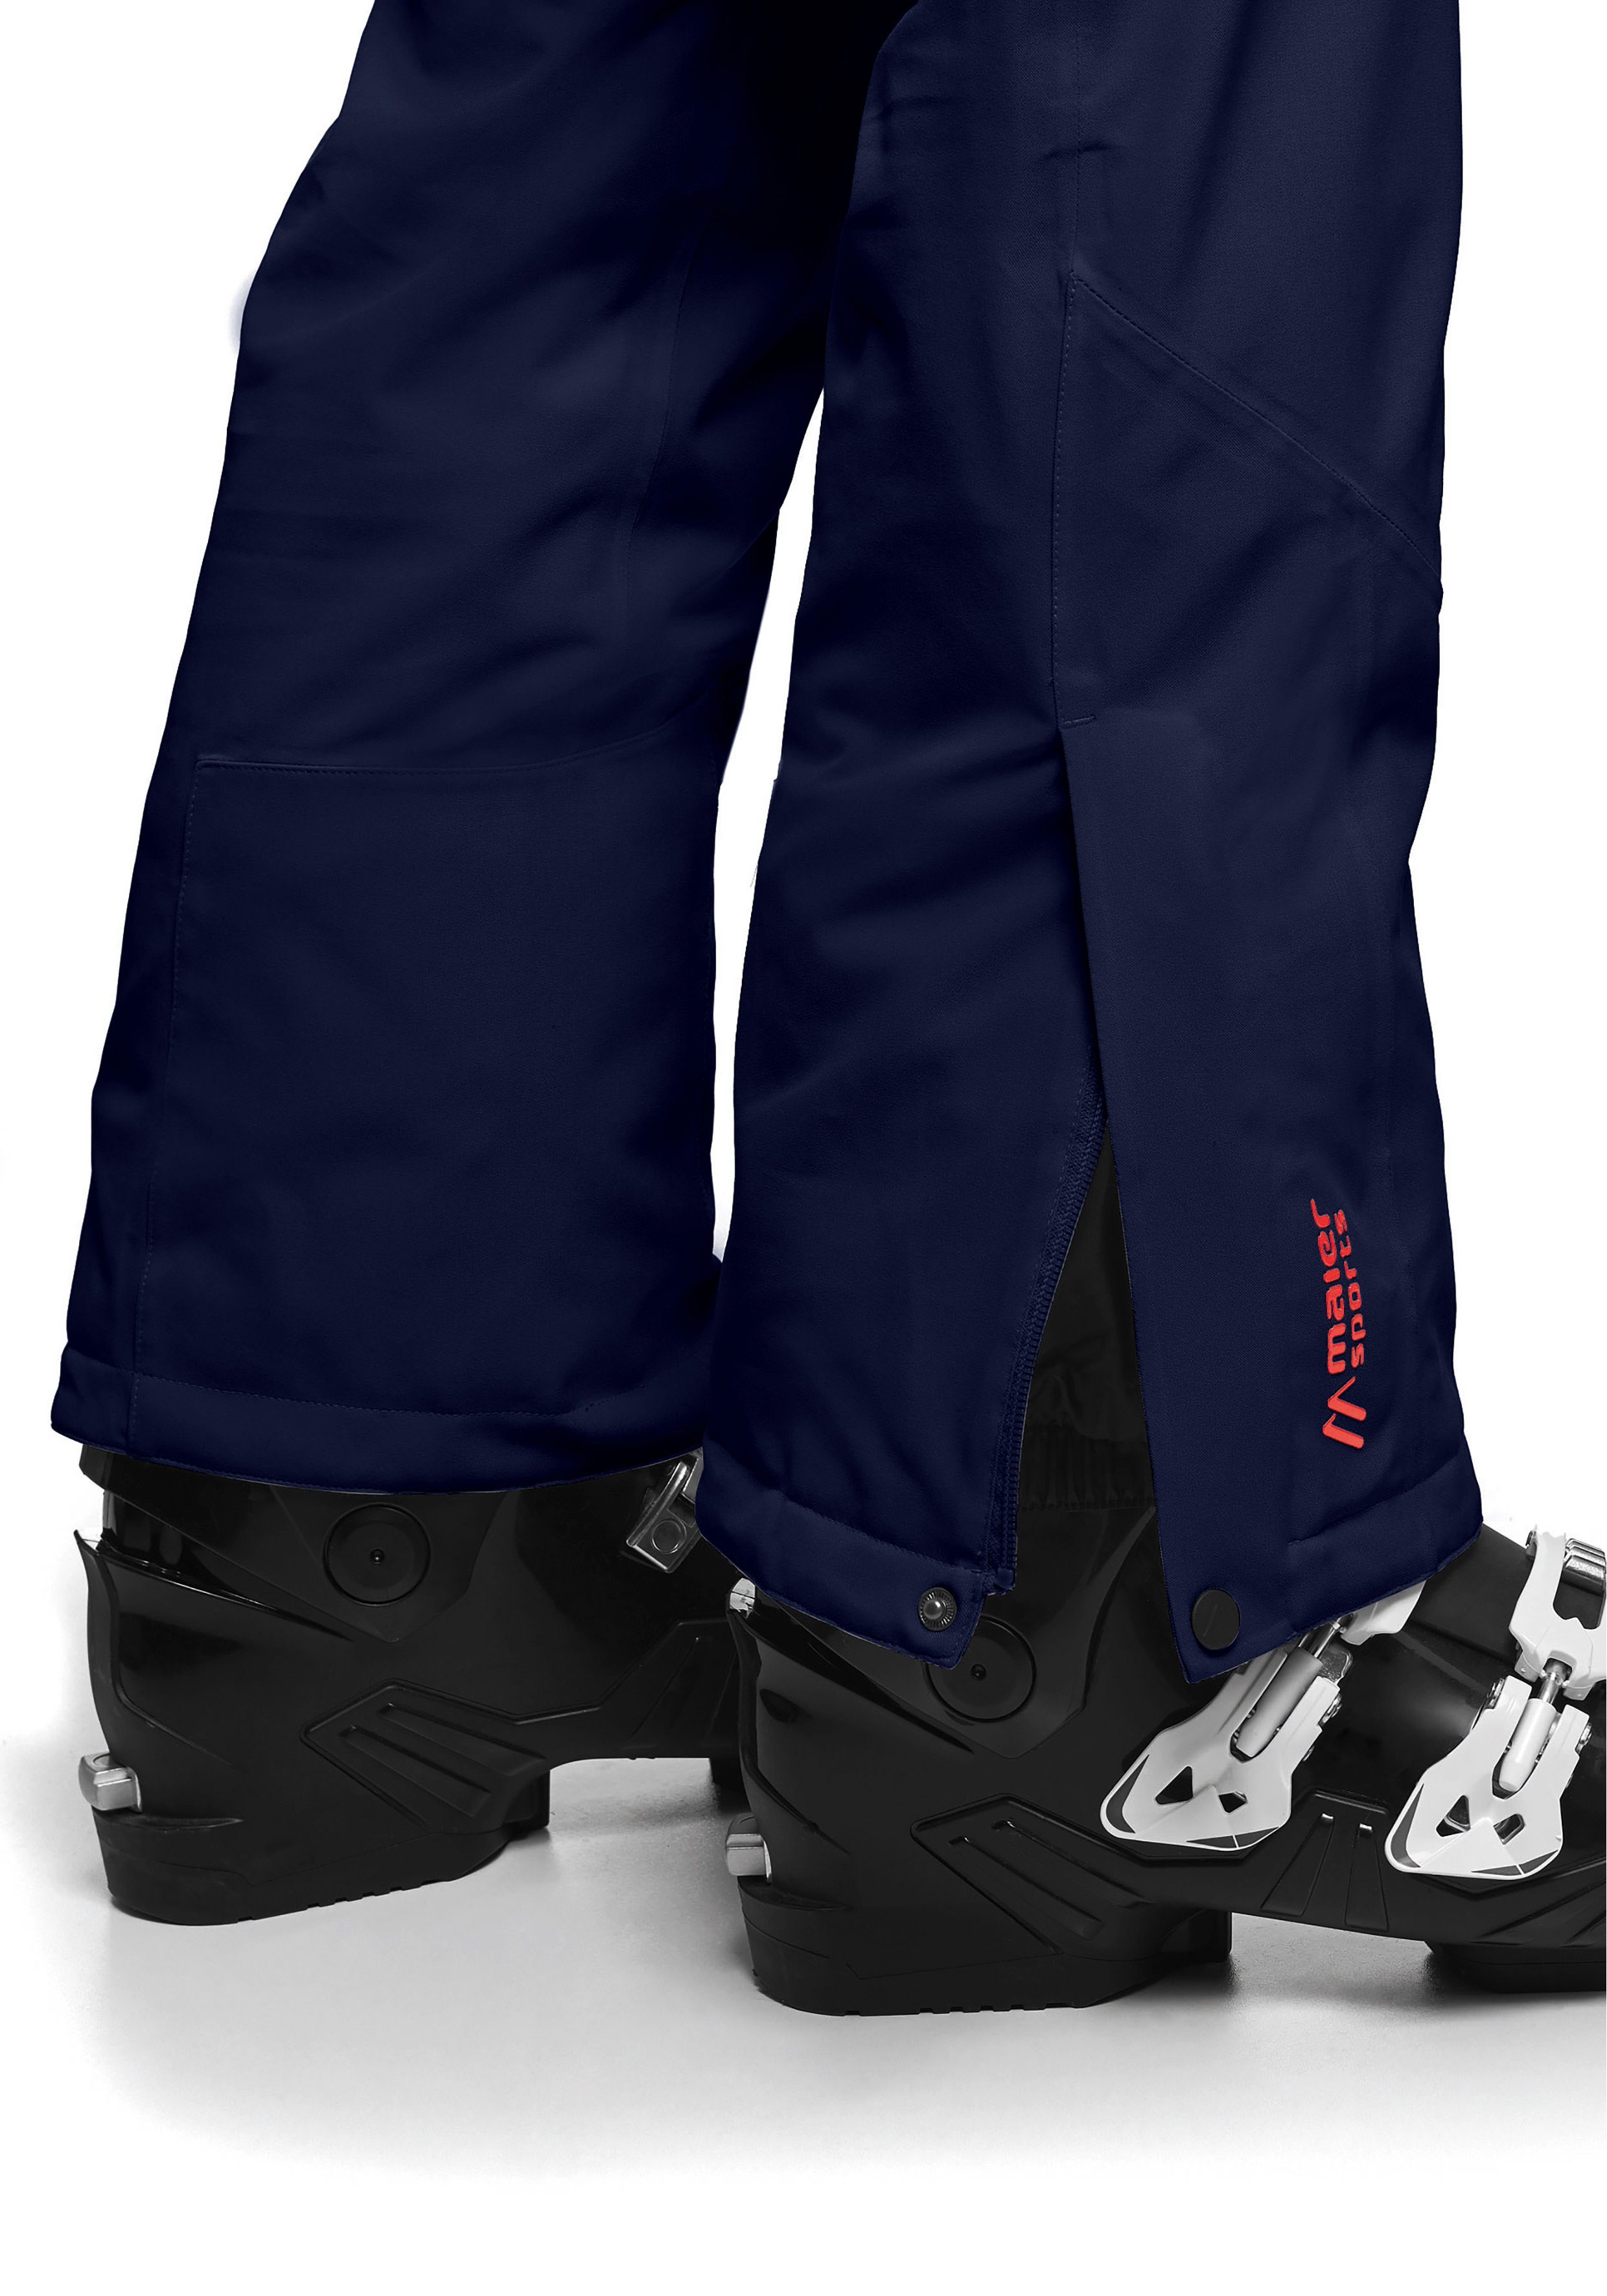 Skihose Silhouette Sports Skihose schlanker sportliche dunkelblau Coral Feminin, Pants in Maier